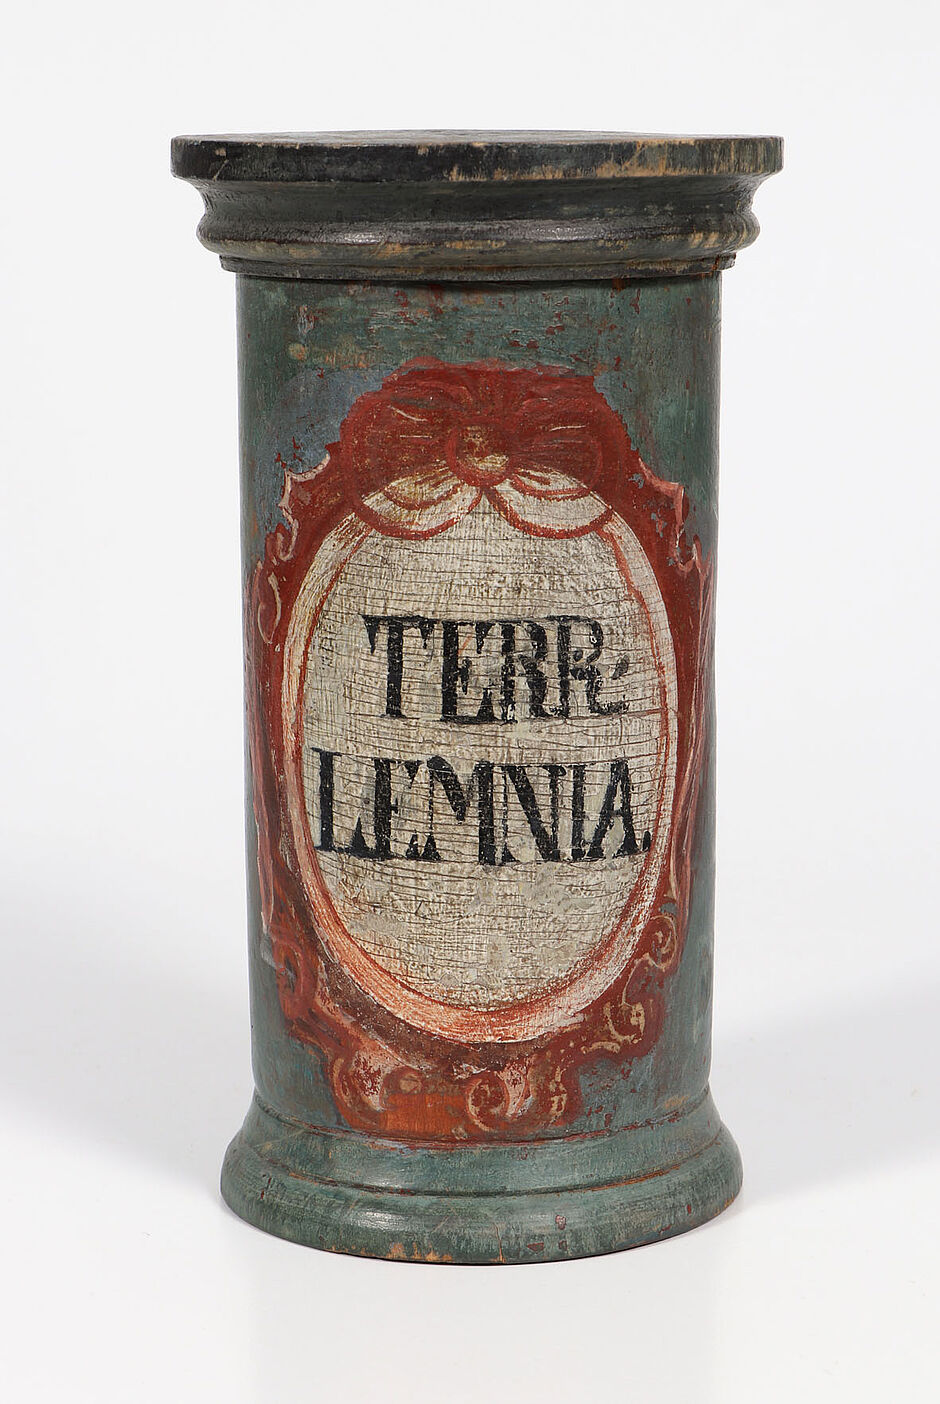 Gefäß für „Terra Lemnia“, Heilerde der Insel Lemnos, Ende 18. / Anfang 19. Jh. (Inv.-Nr. II G 76, © Dt. Apotheken Museum-Stiftung, Heidelberg).